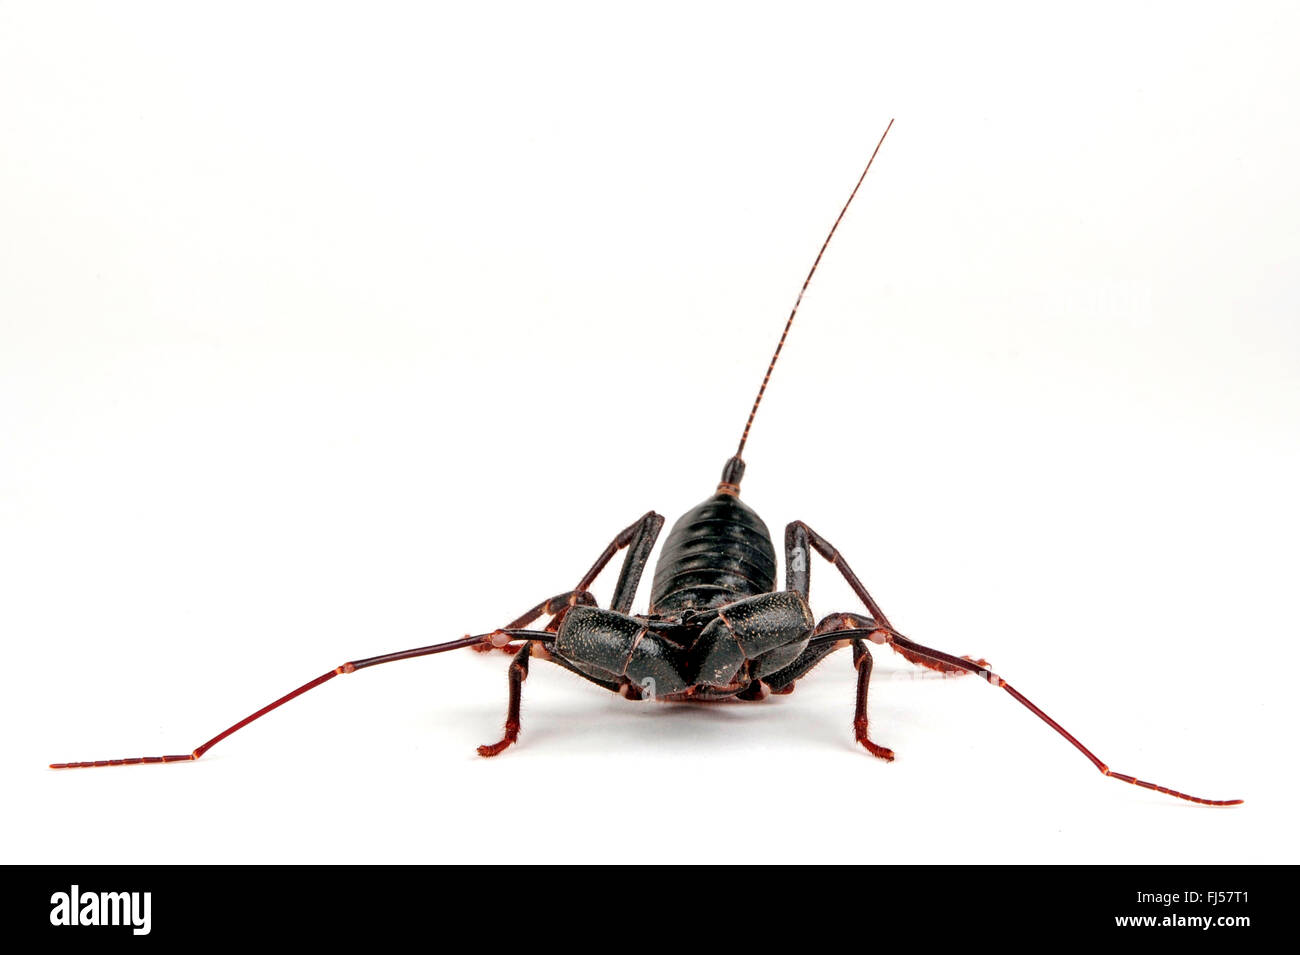 Giant vinegaroon, Whip scorpion (Mastigoproctus giganteus), North American Whip scorpion, cut-out Stock Photo